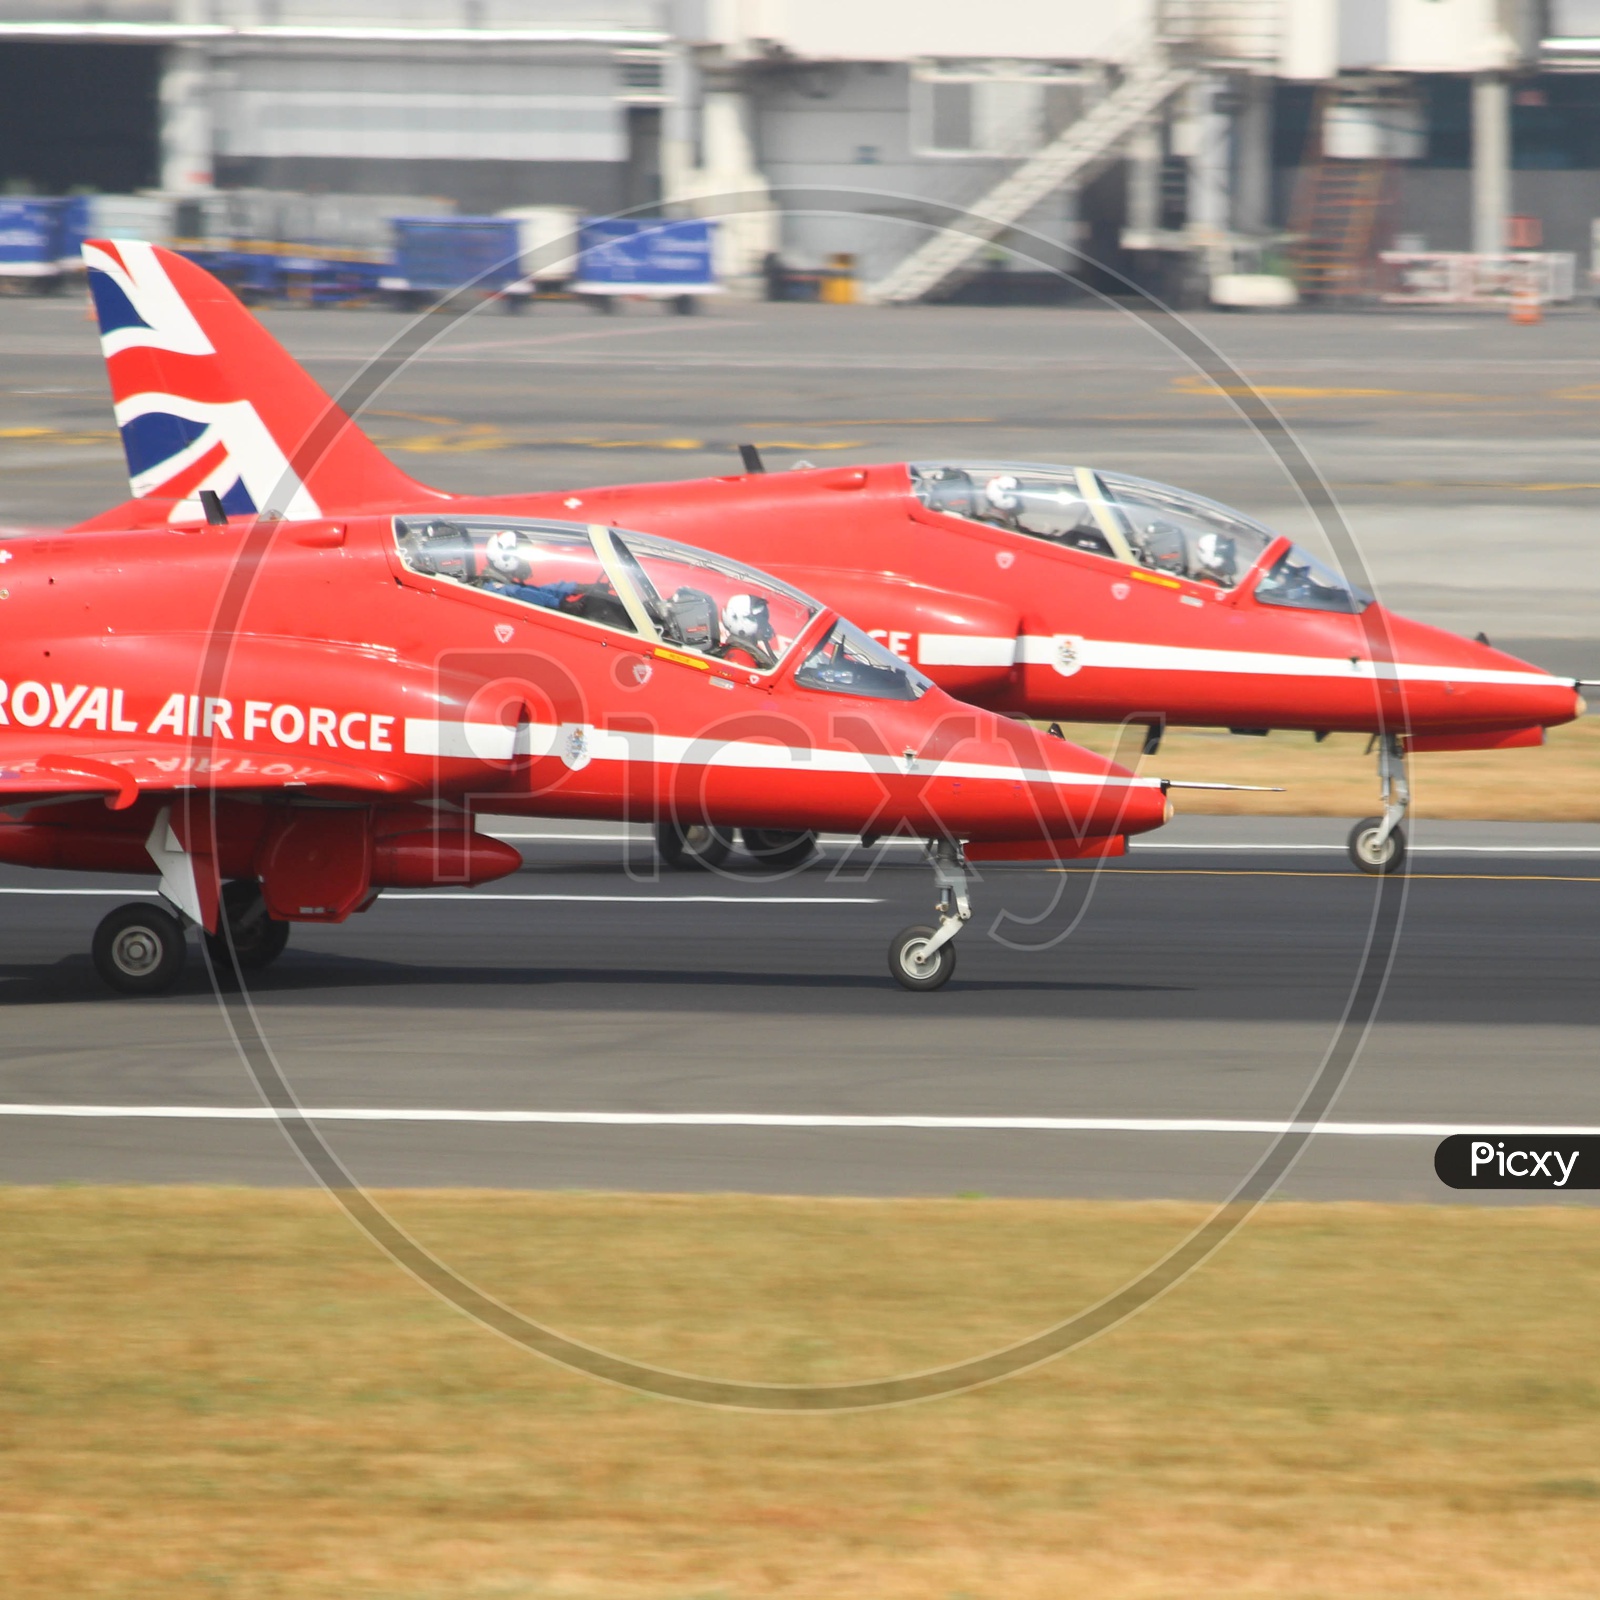 Royal airforce UK bae hawks landing in mumbai after performing acrobatics in malaysia.